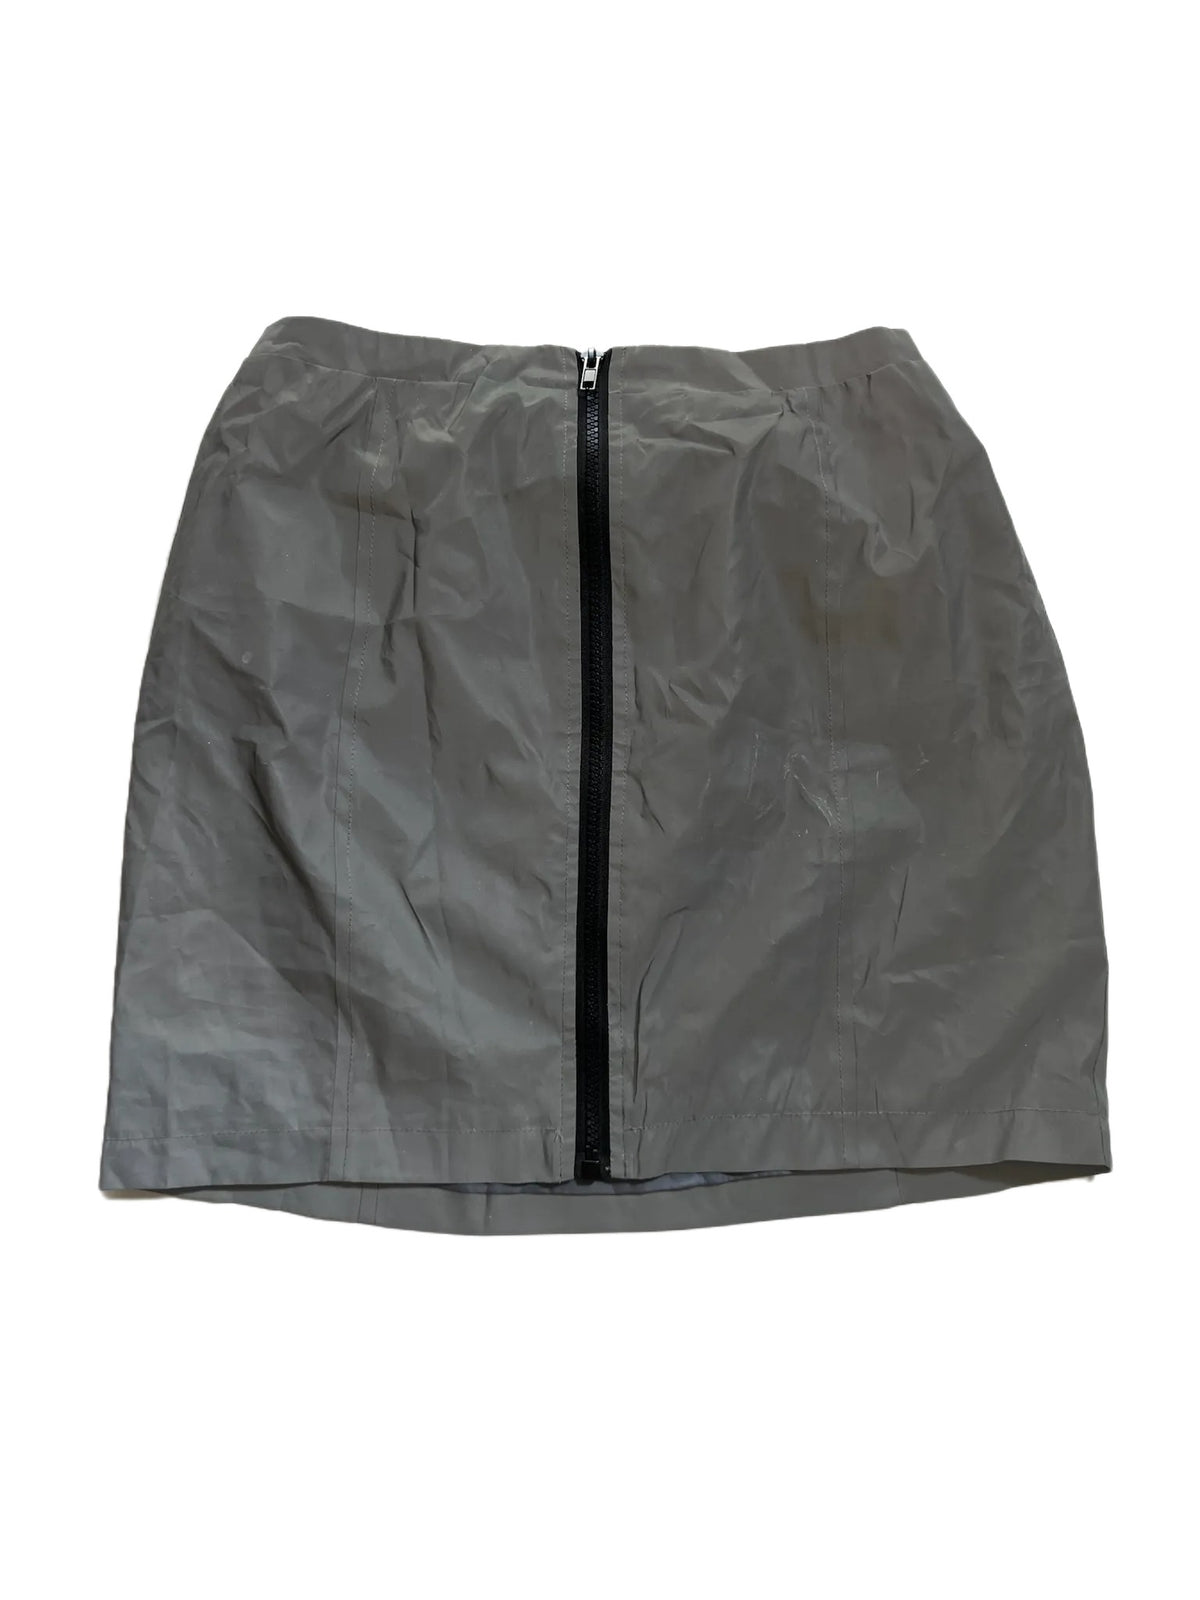 WFFS- Reflective Silver Mini Skirt